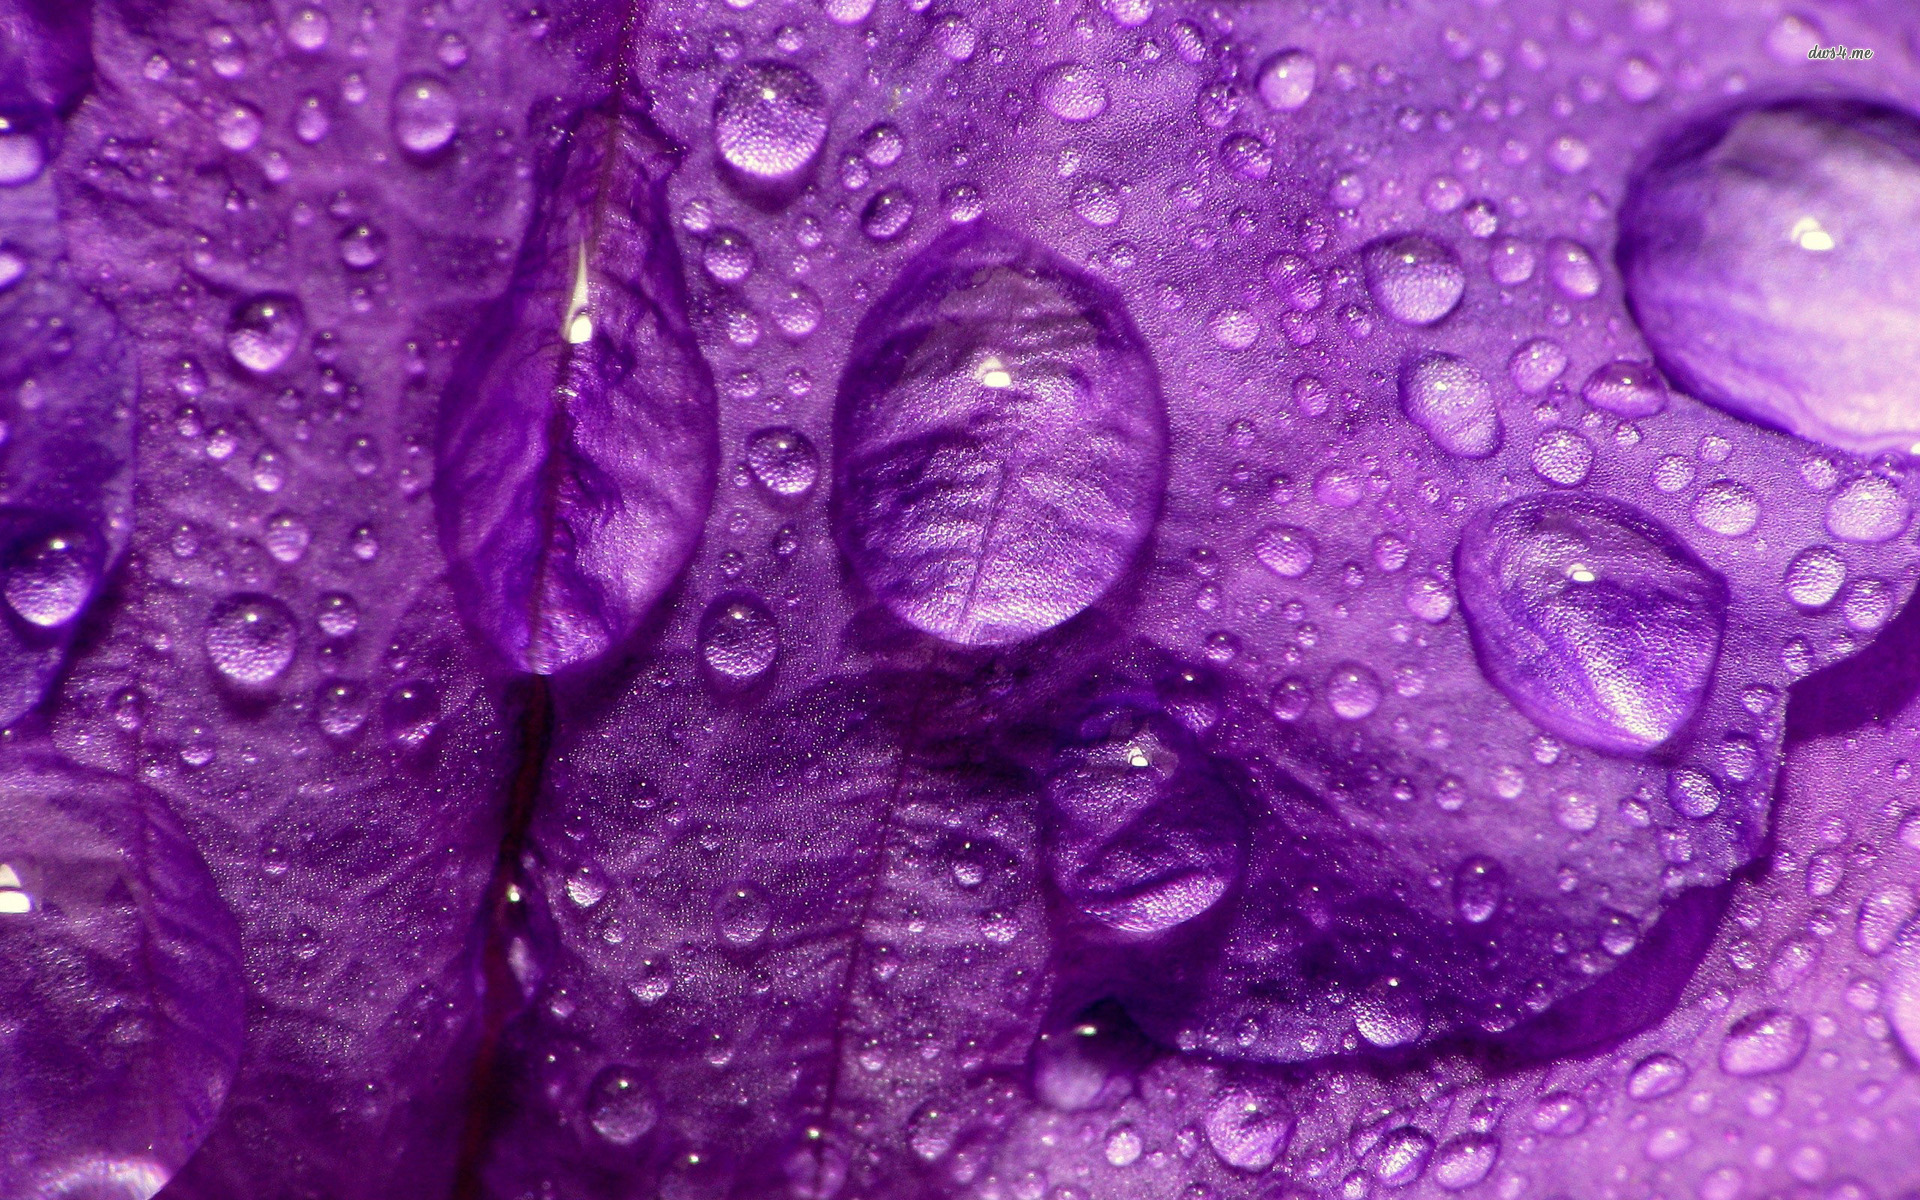 Rain drops on purple petals wallpaper - Flower wallpapers